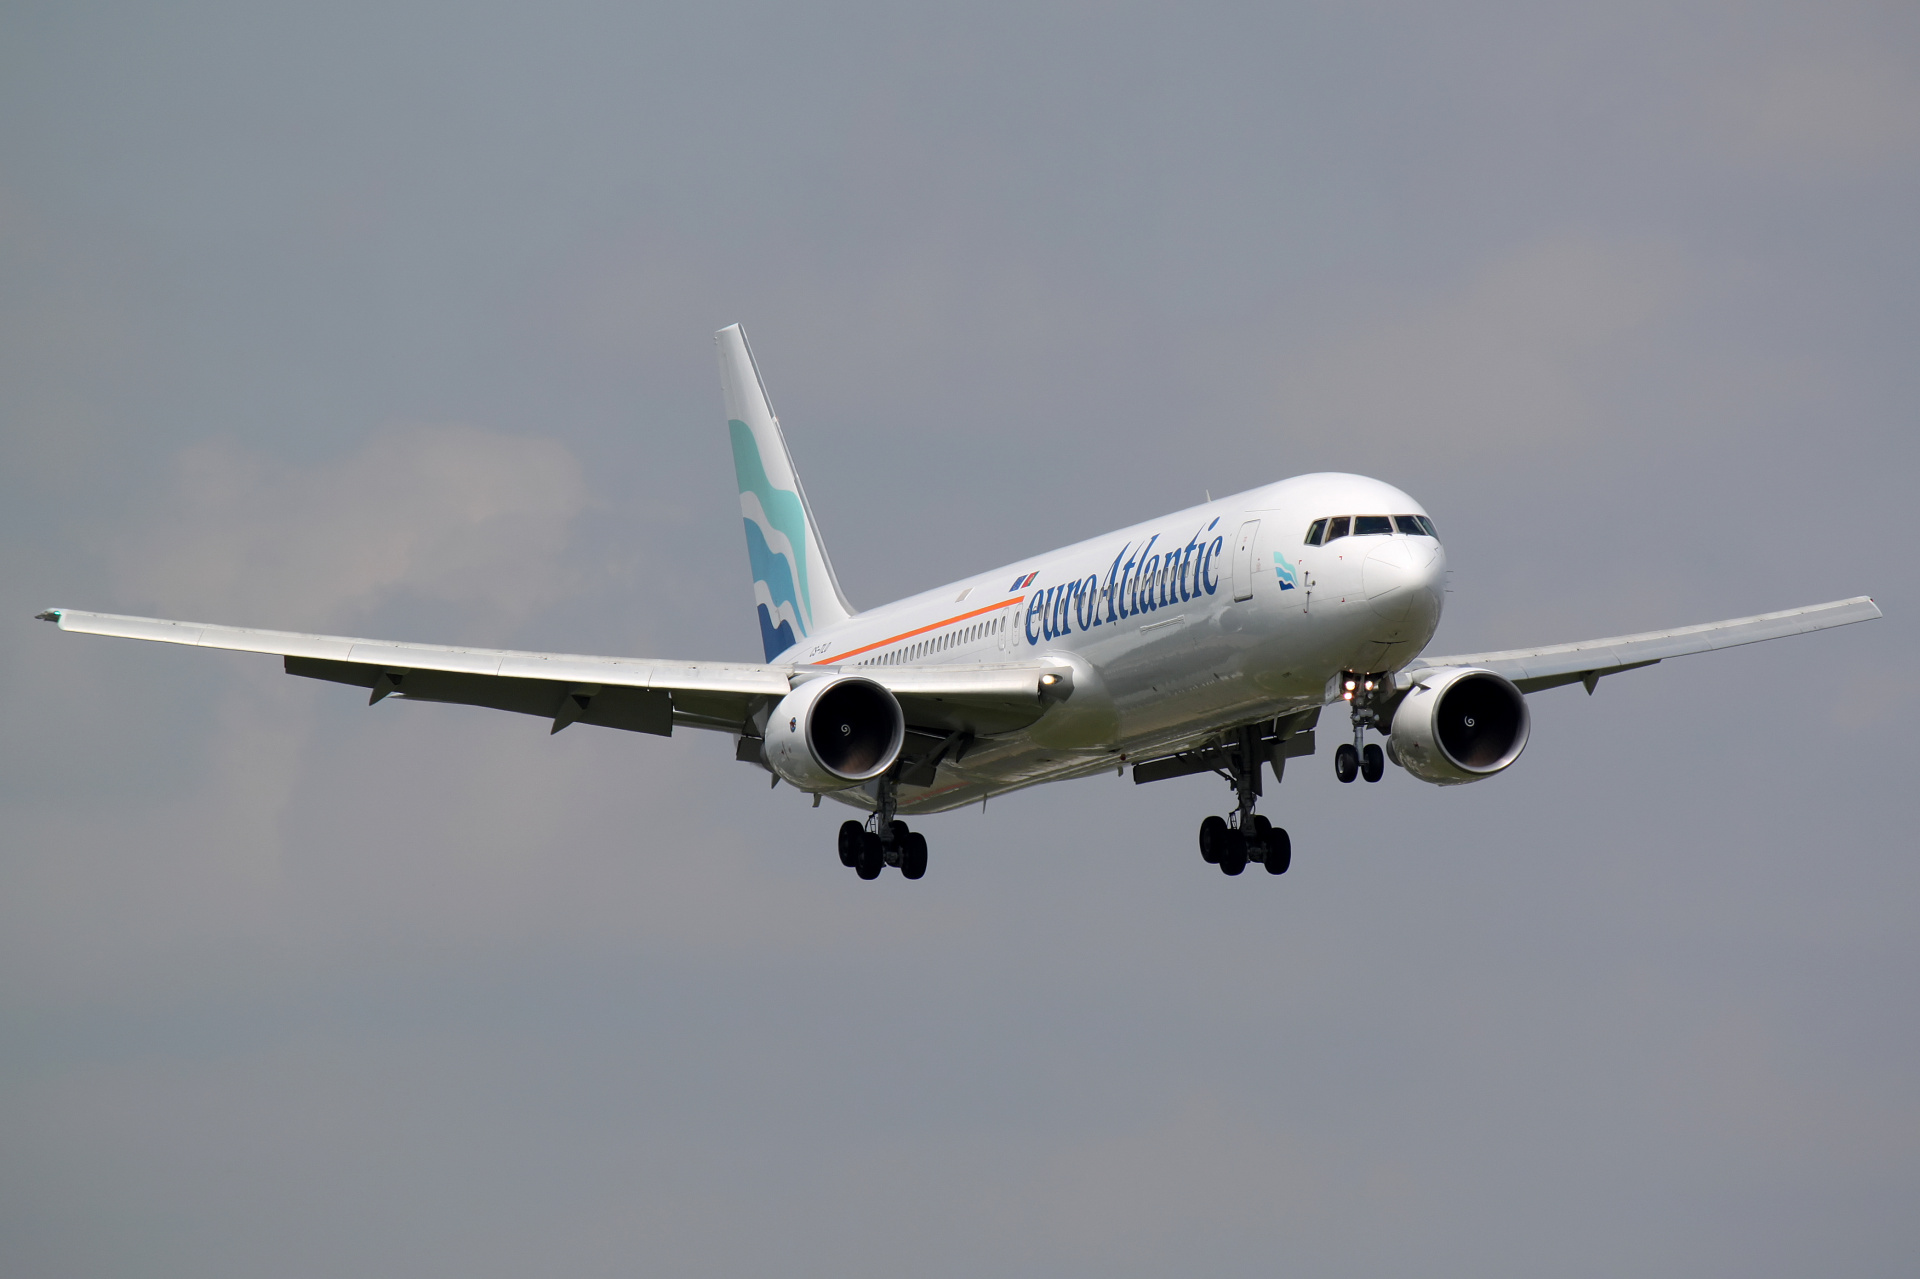 CS-TLO (Samoloty » Spotting na EPWA » Boeing 767-300 » EuroAtlantic Airways)